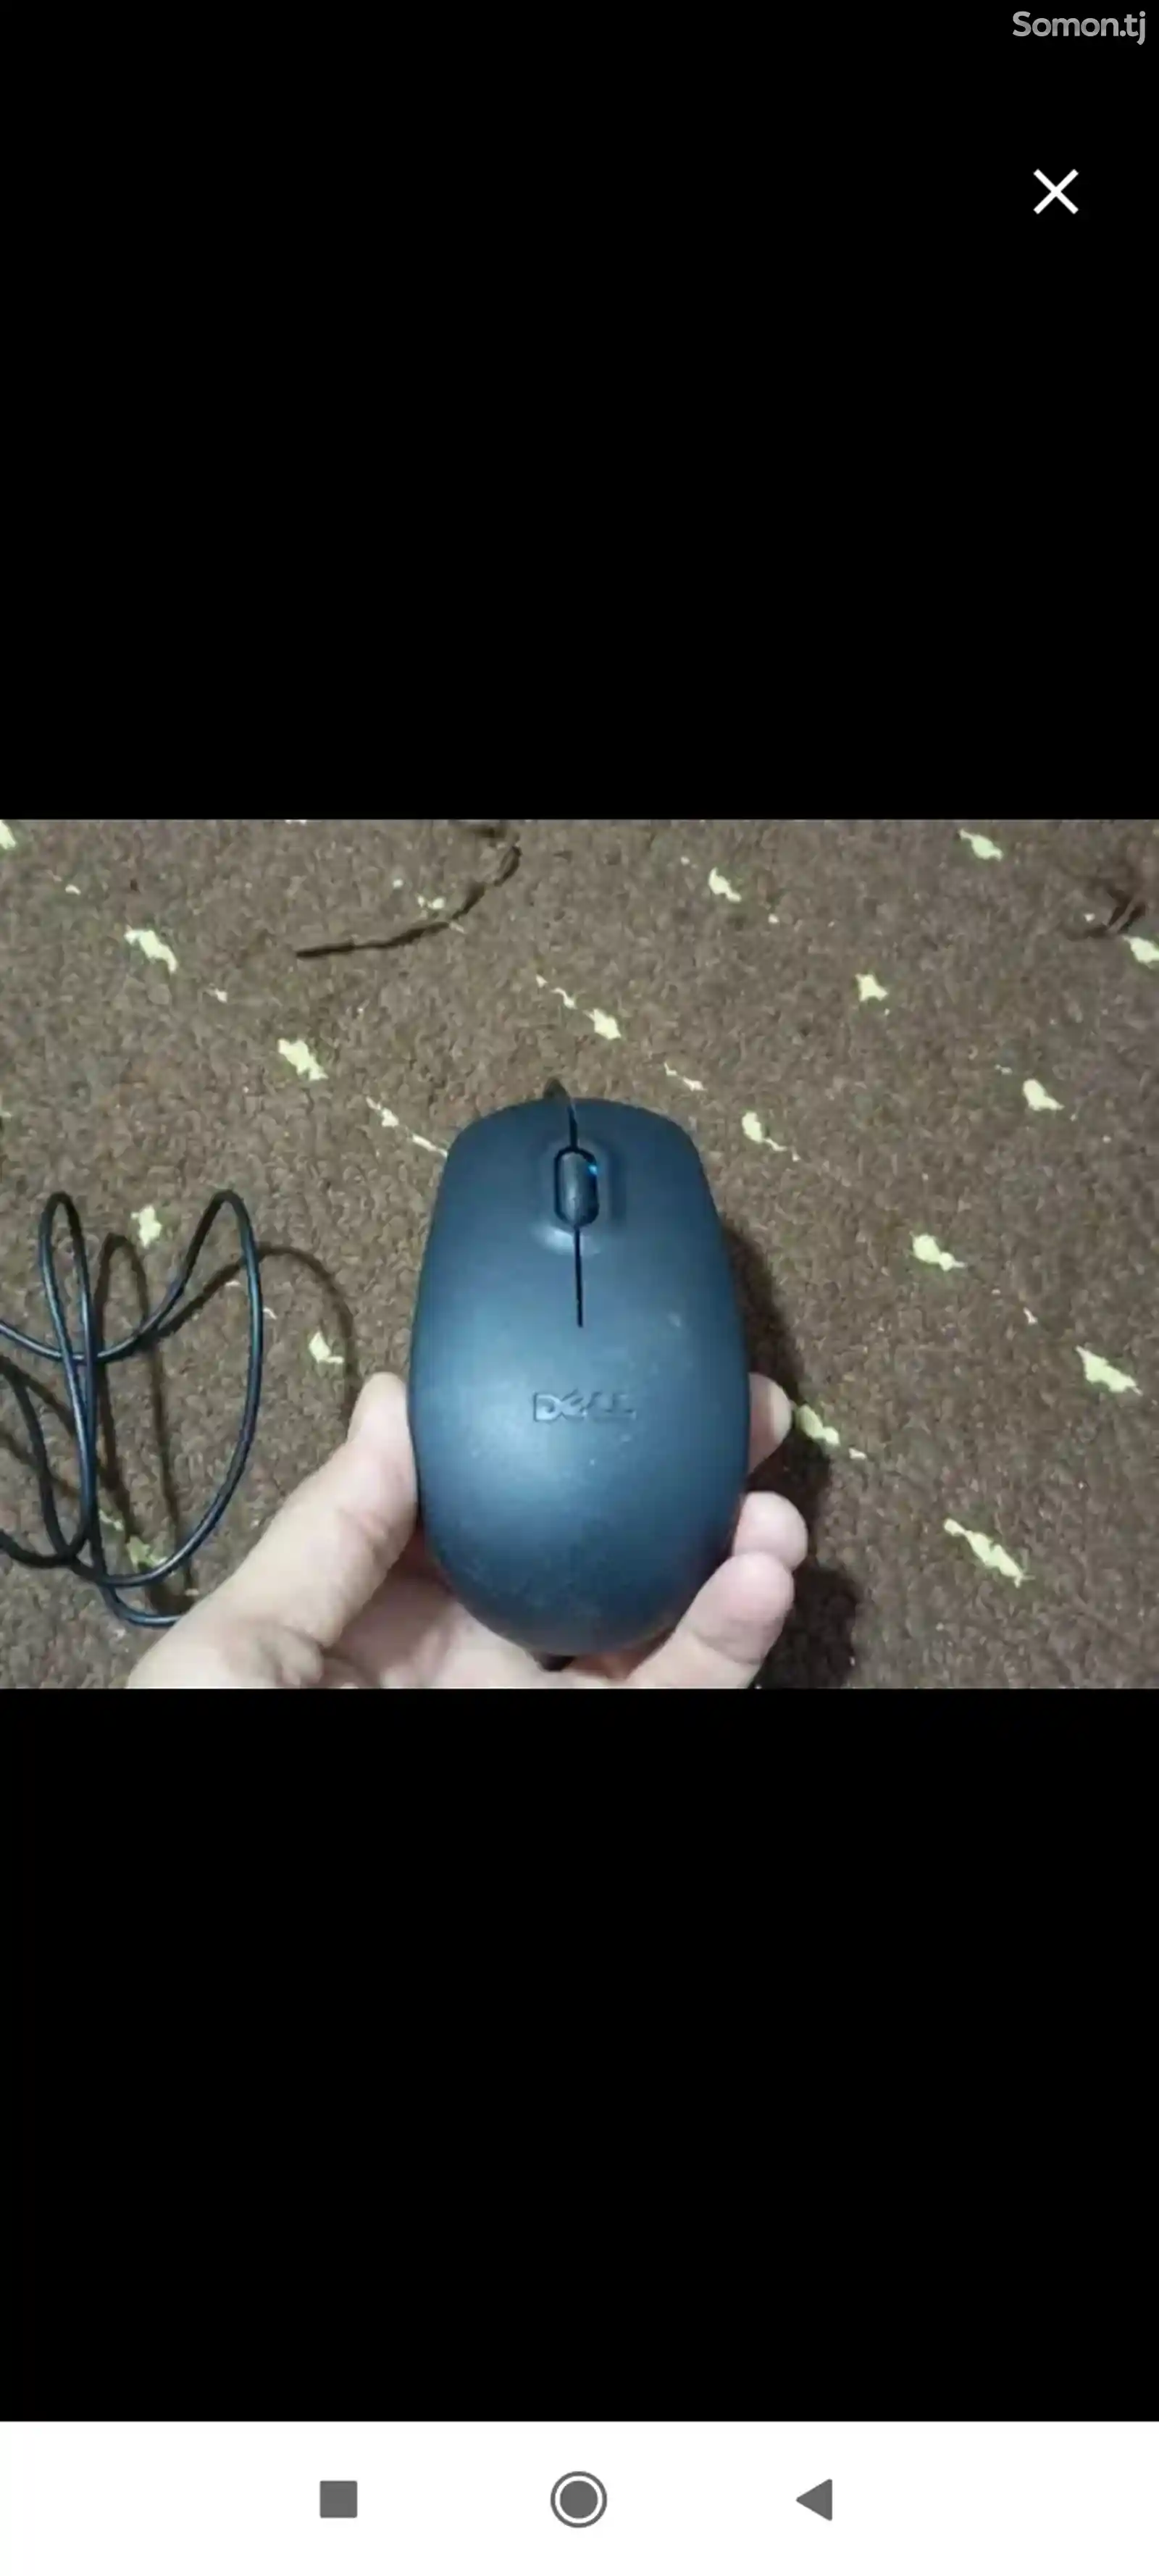 Клавиатура с мышью-2